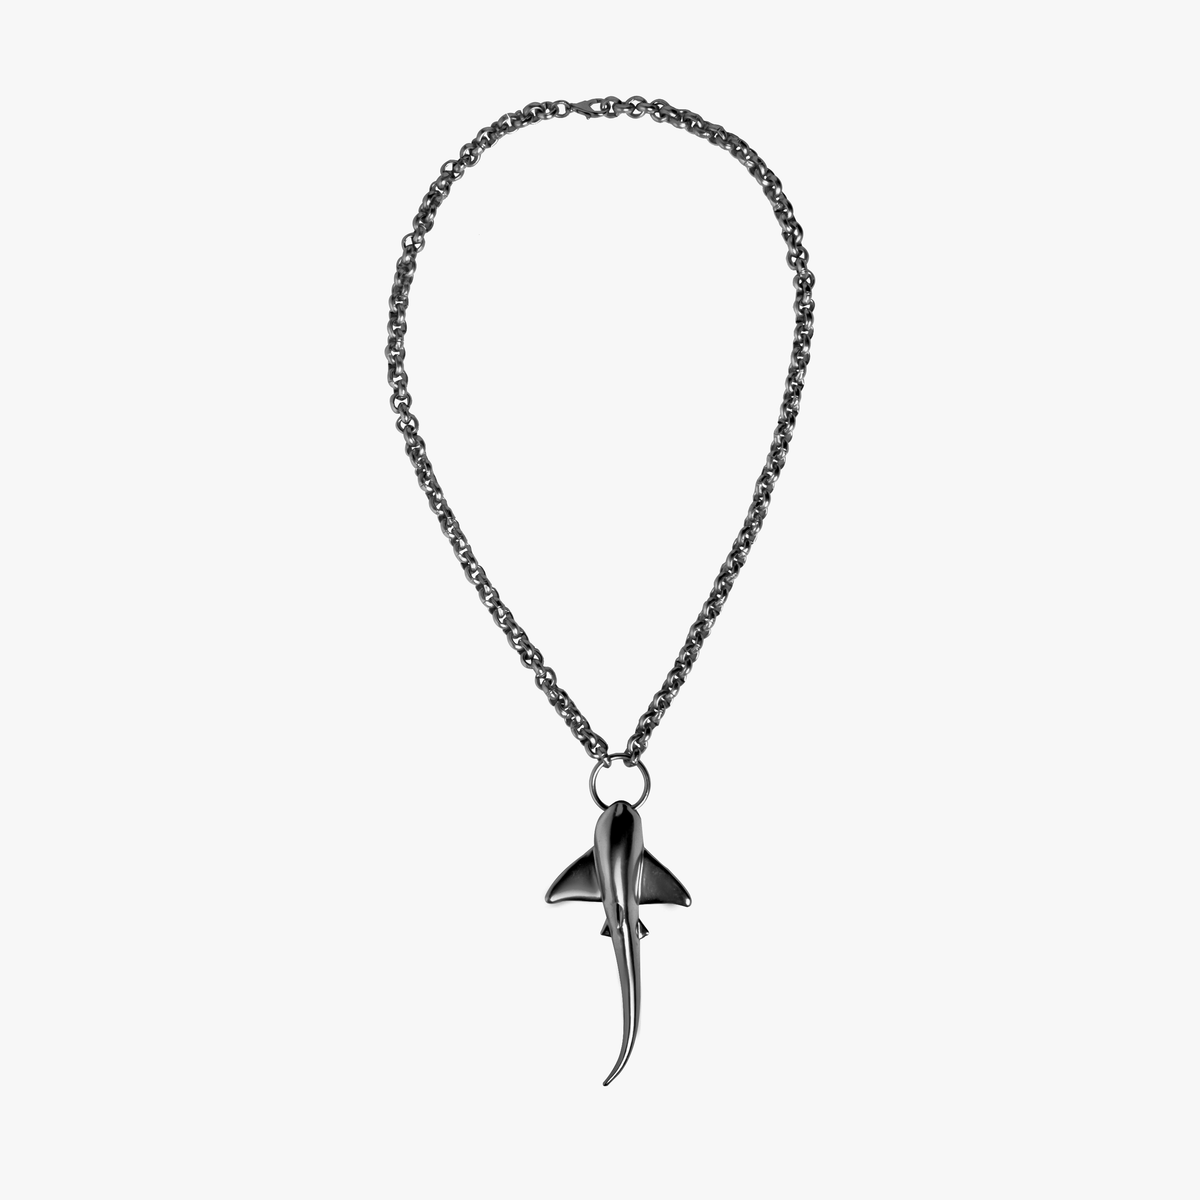 Shark Necklace - Black Chrome Tone